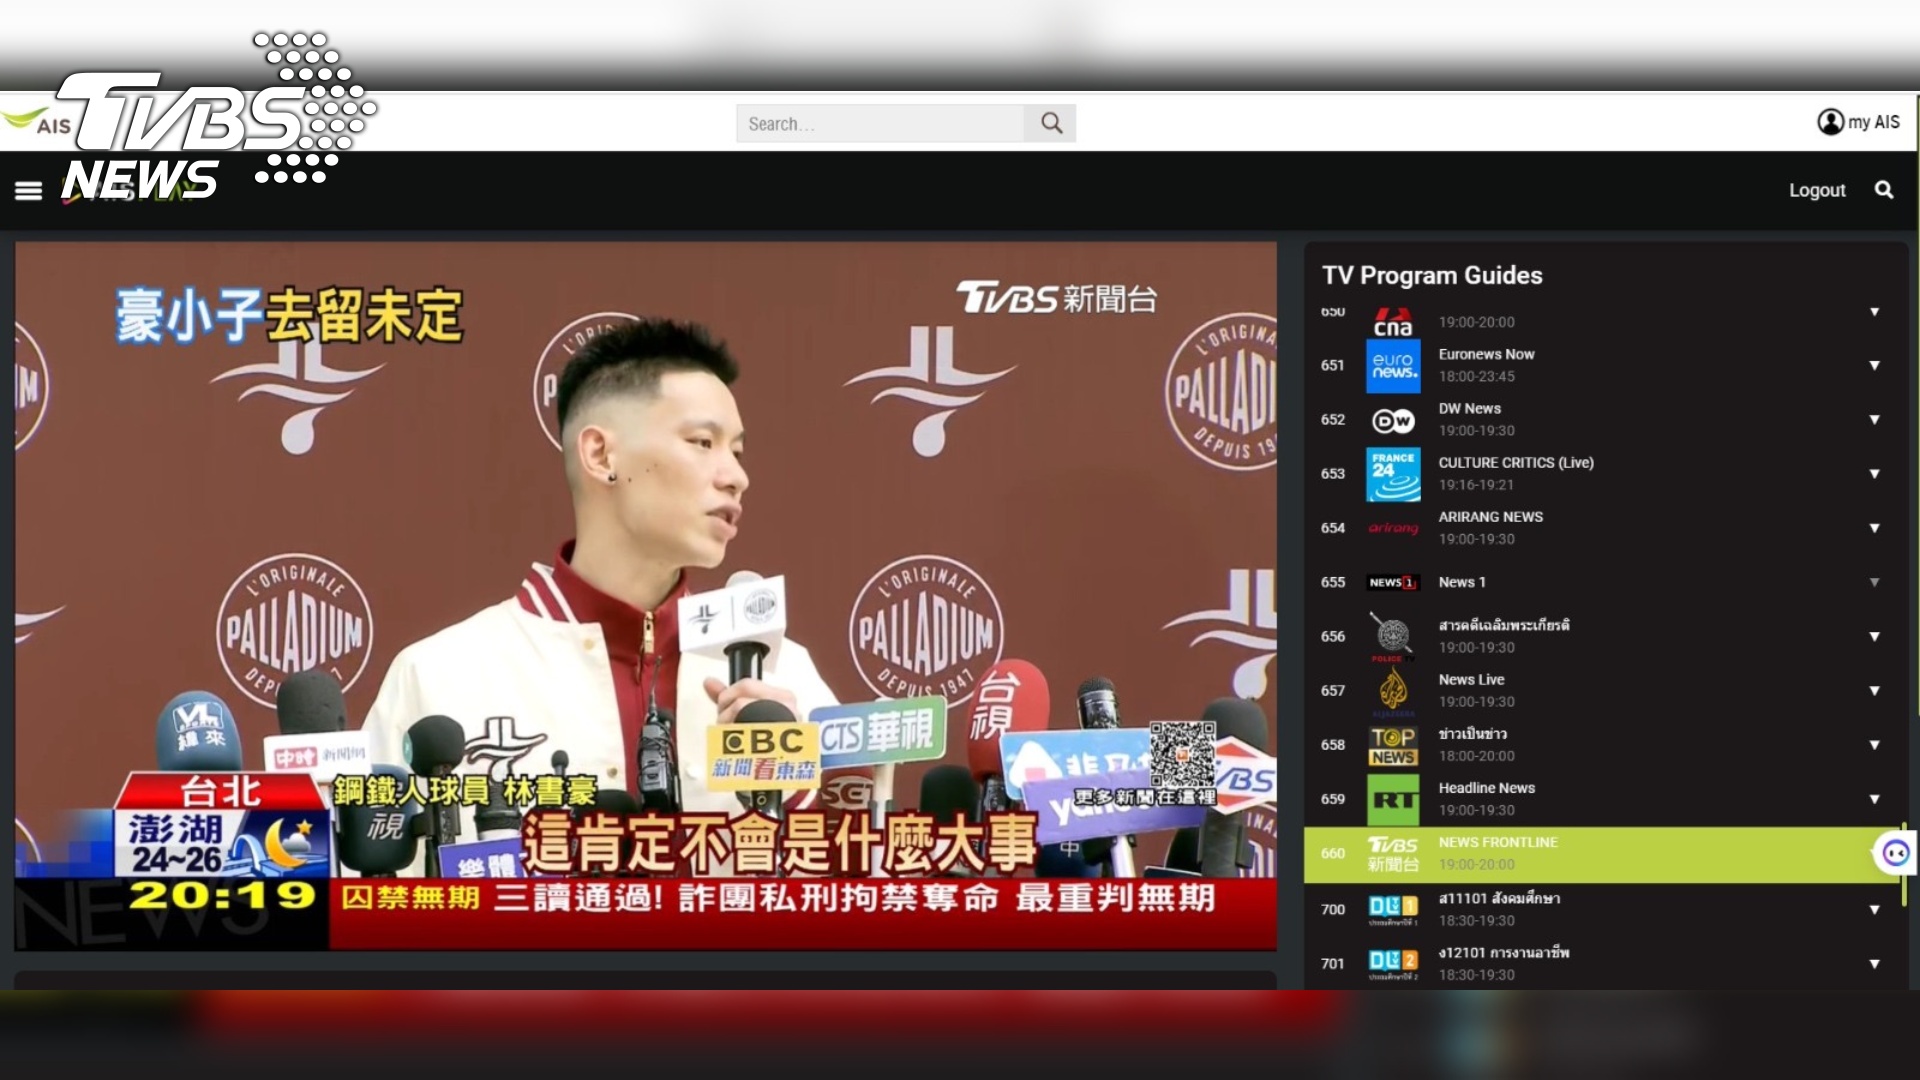 TVBS為AIS Play OTT視頻平台上唯一的台灣新聞媒體(圖TVBS提供)